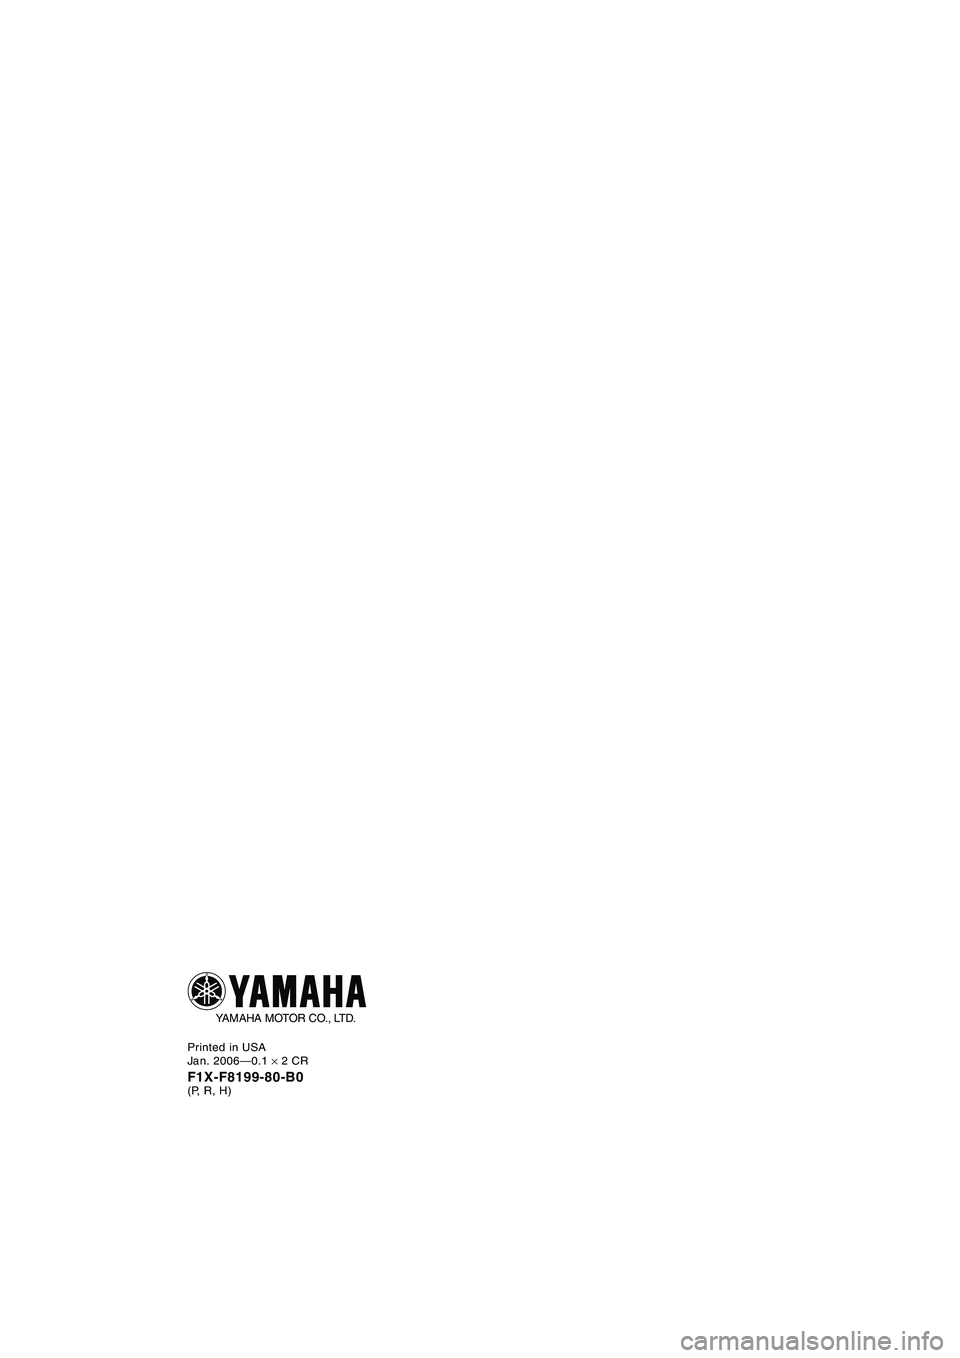 YAMAHA FX HO 2006  Manuale duso (in Italian) Printed in USA
Jan. 2006—0.1 × 2 CR
F1X-F8199-80-B0(P, R, H)
YAMAHA MOTOR CO., LTD.
U-WC_Cover4_F1X_80-B.fm  Page 1  Tuesday, January 31, 2006  10:36 AM 